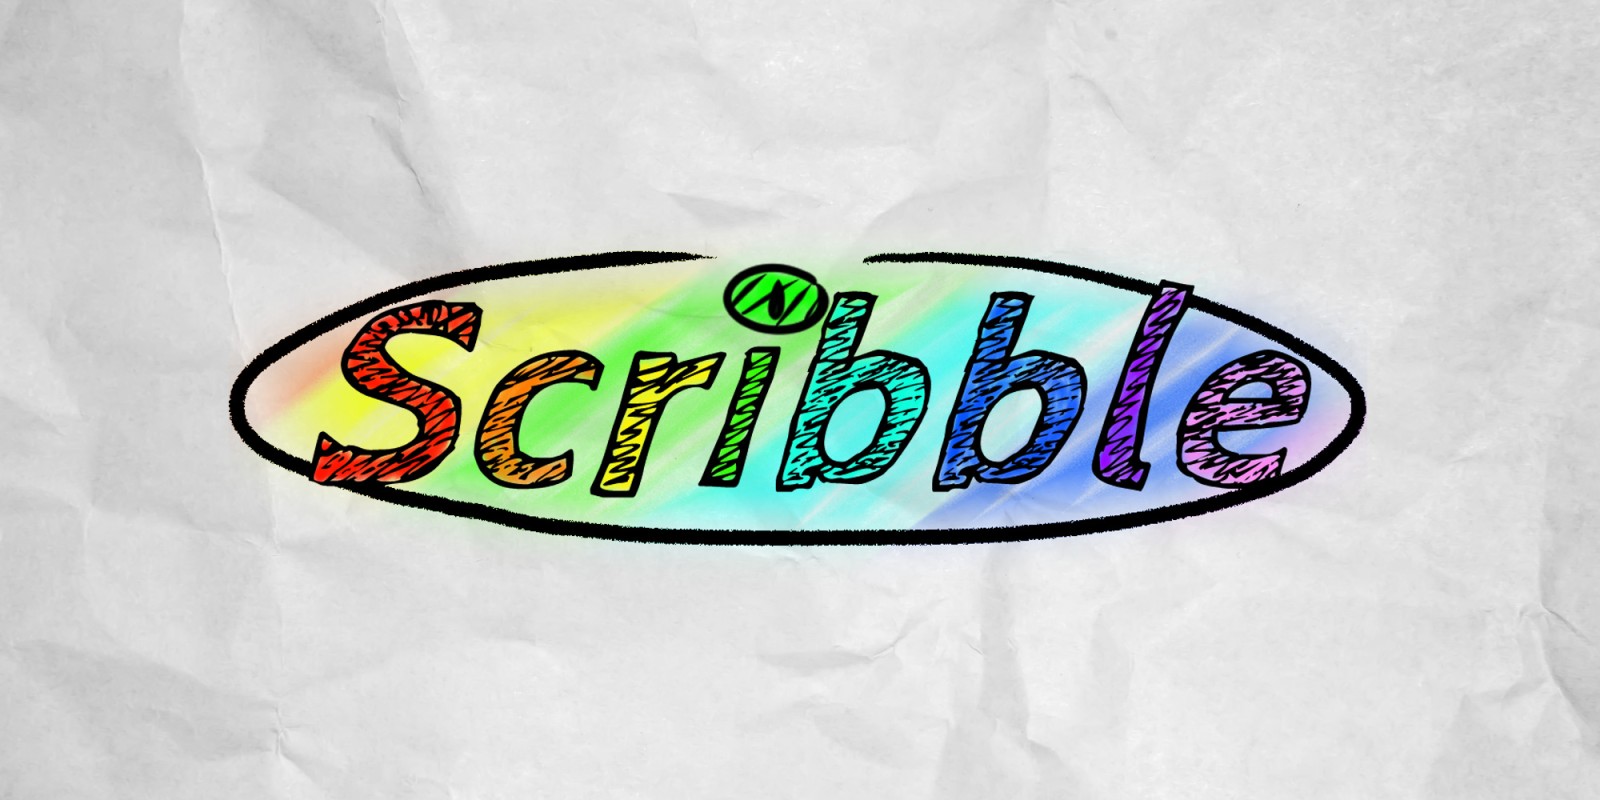 Scribble It! free download